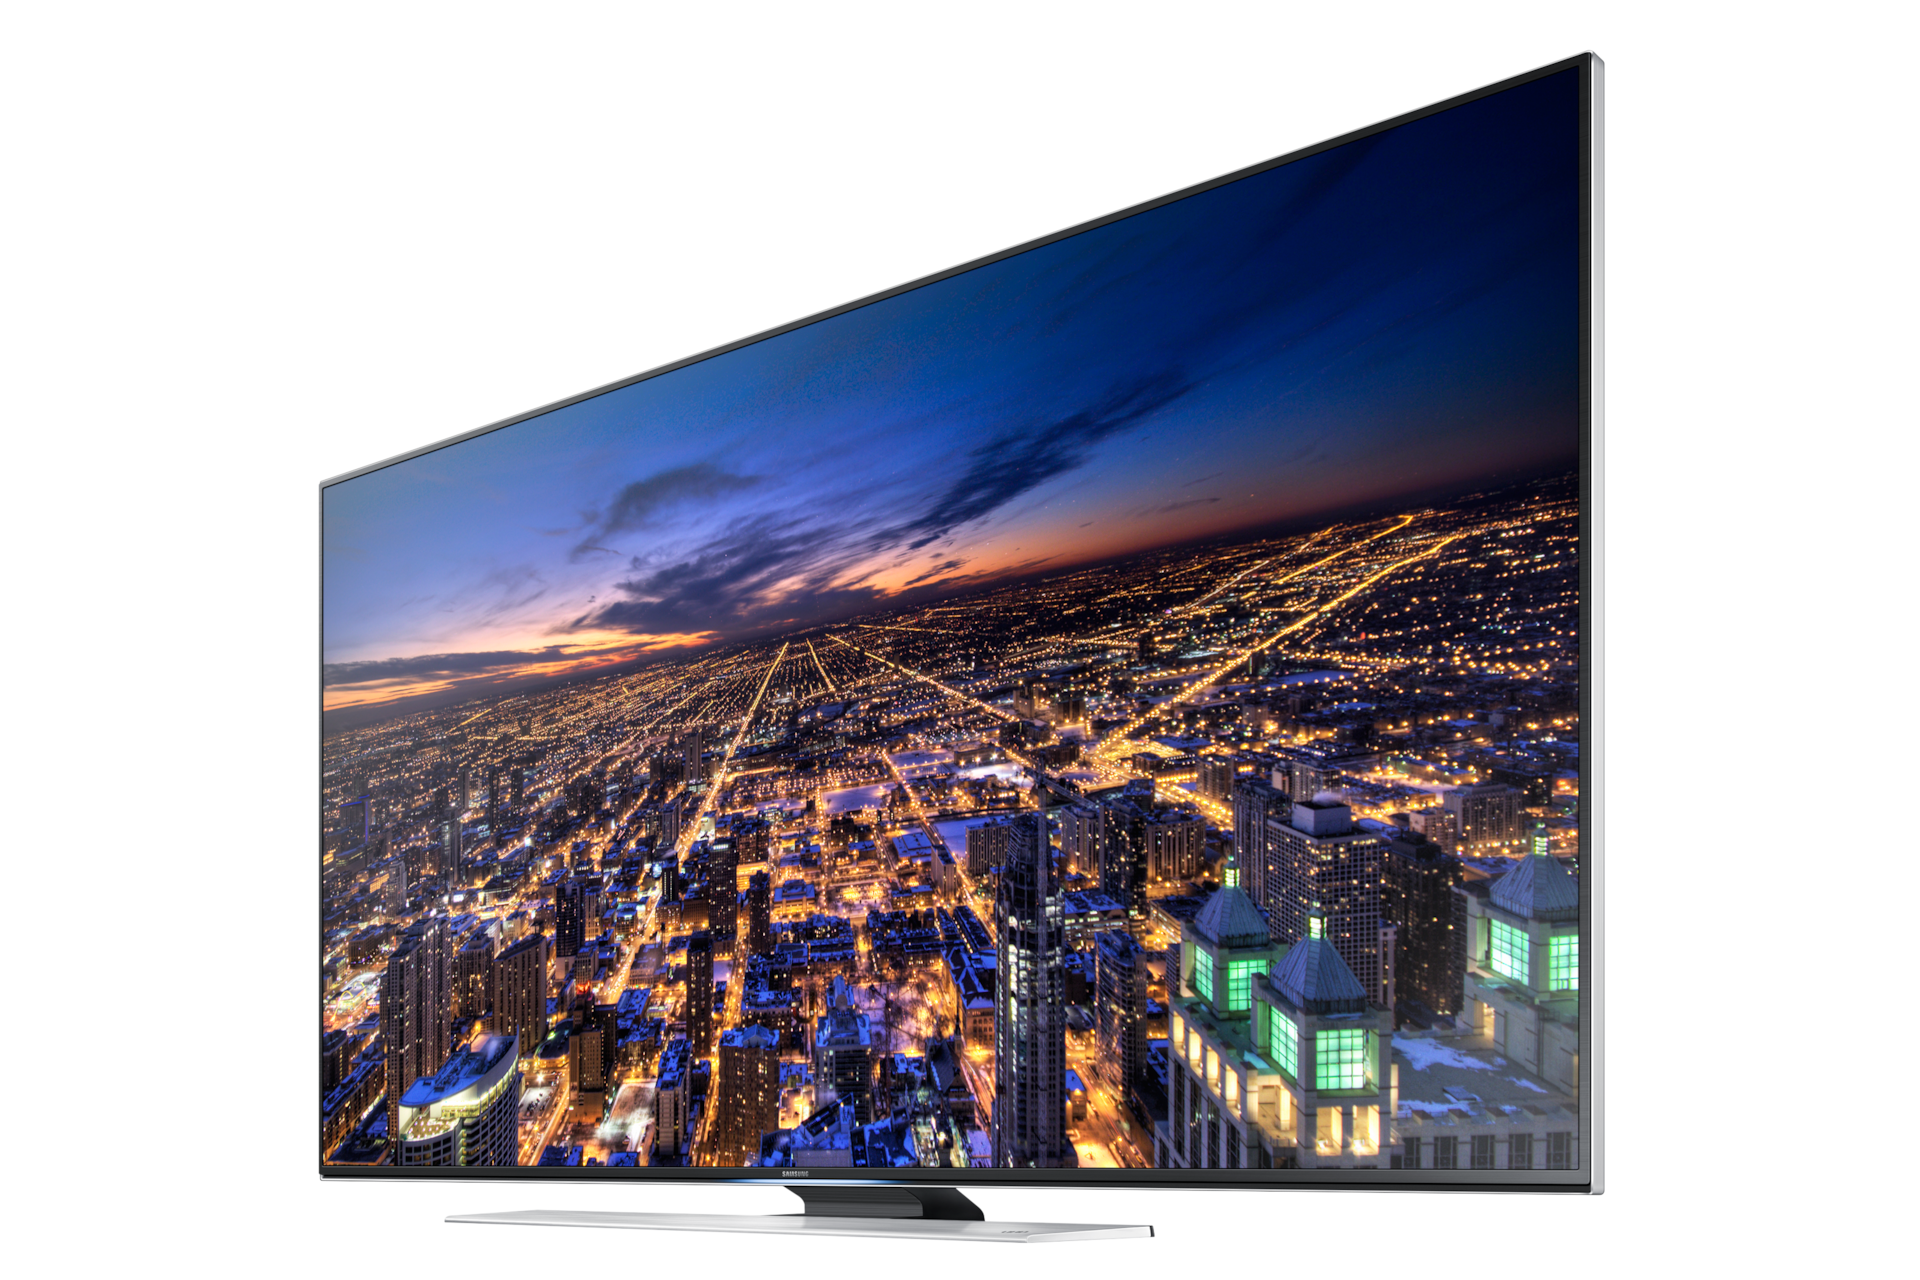 Samsung UHD TV, 4K TV, 85 Inch UHD Full HD TV Price, Features, Specs3000 x 2000